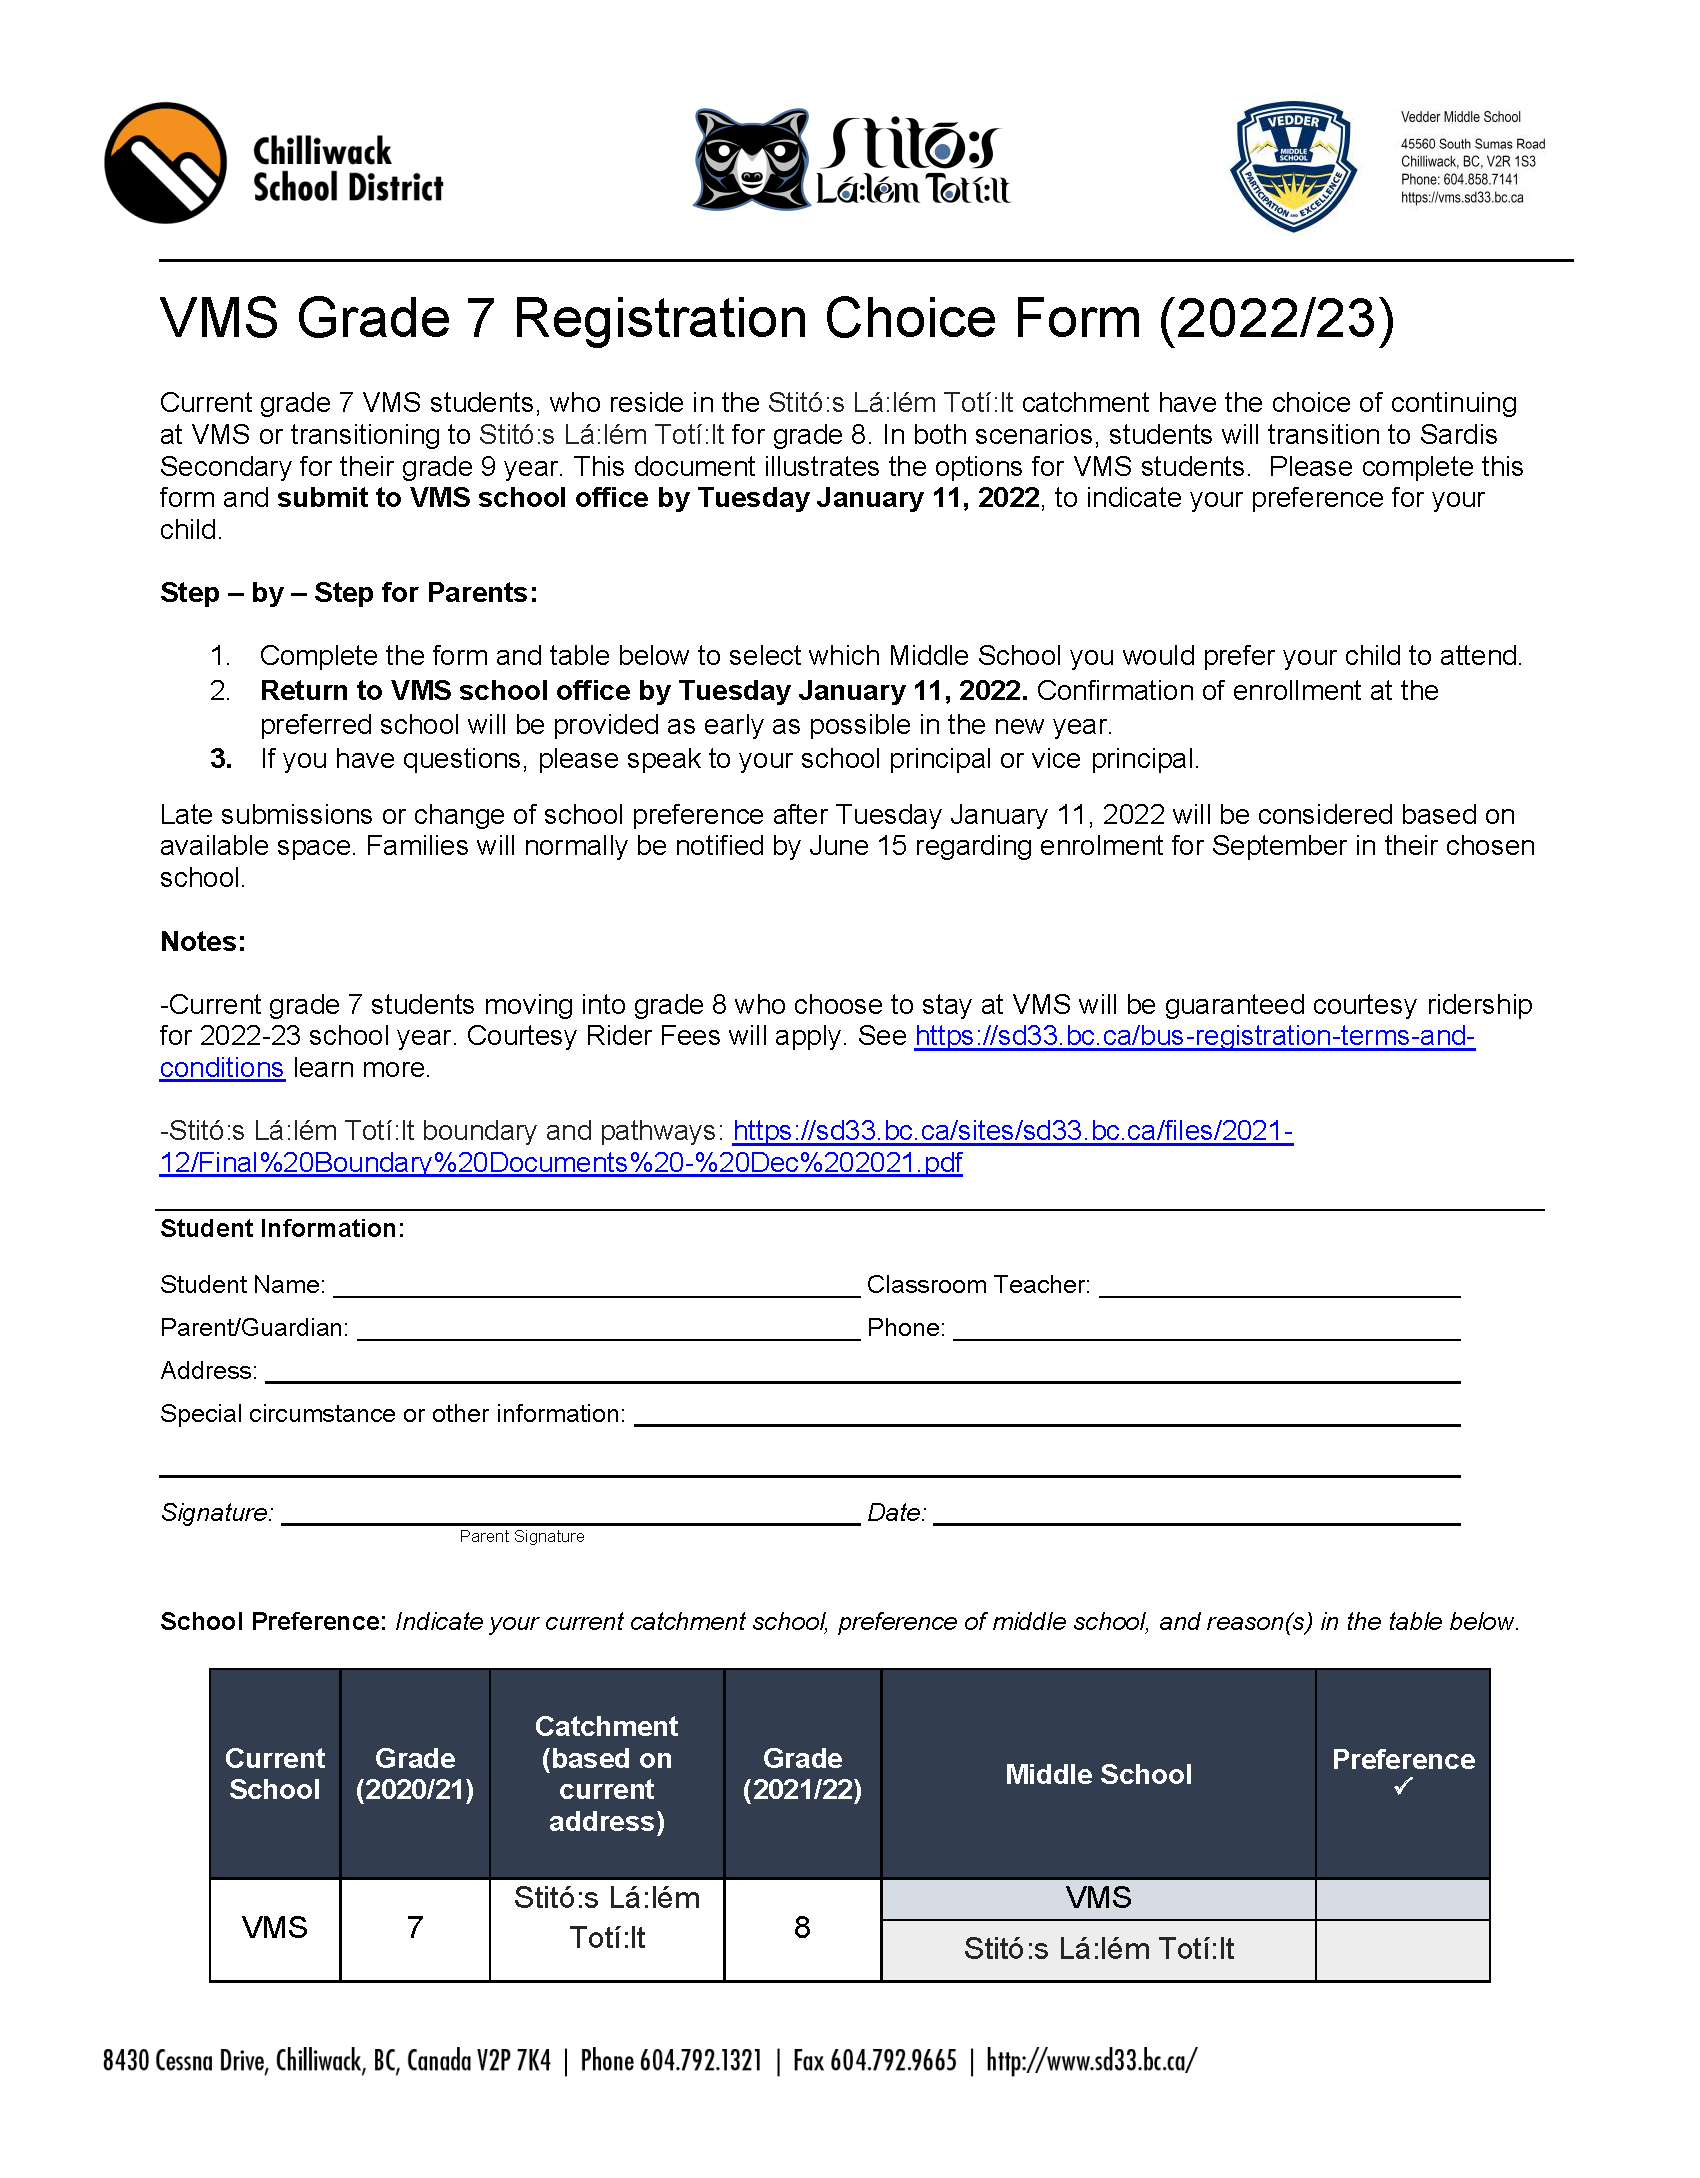 VMS Grade 8 Options for 2022-23 Registration